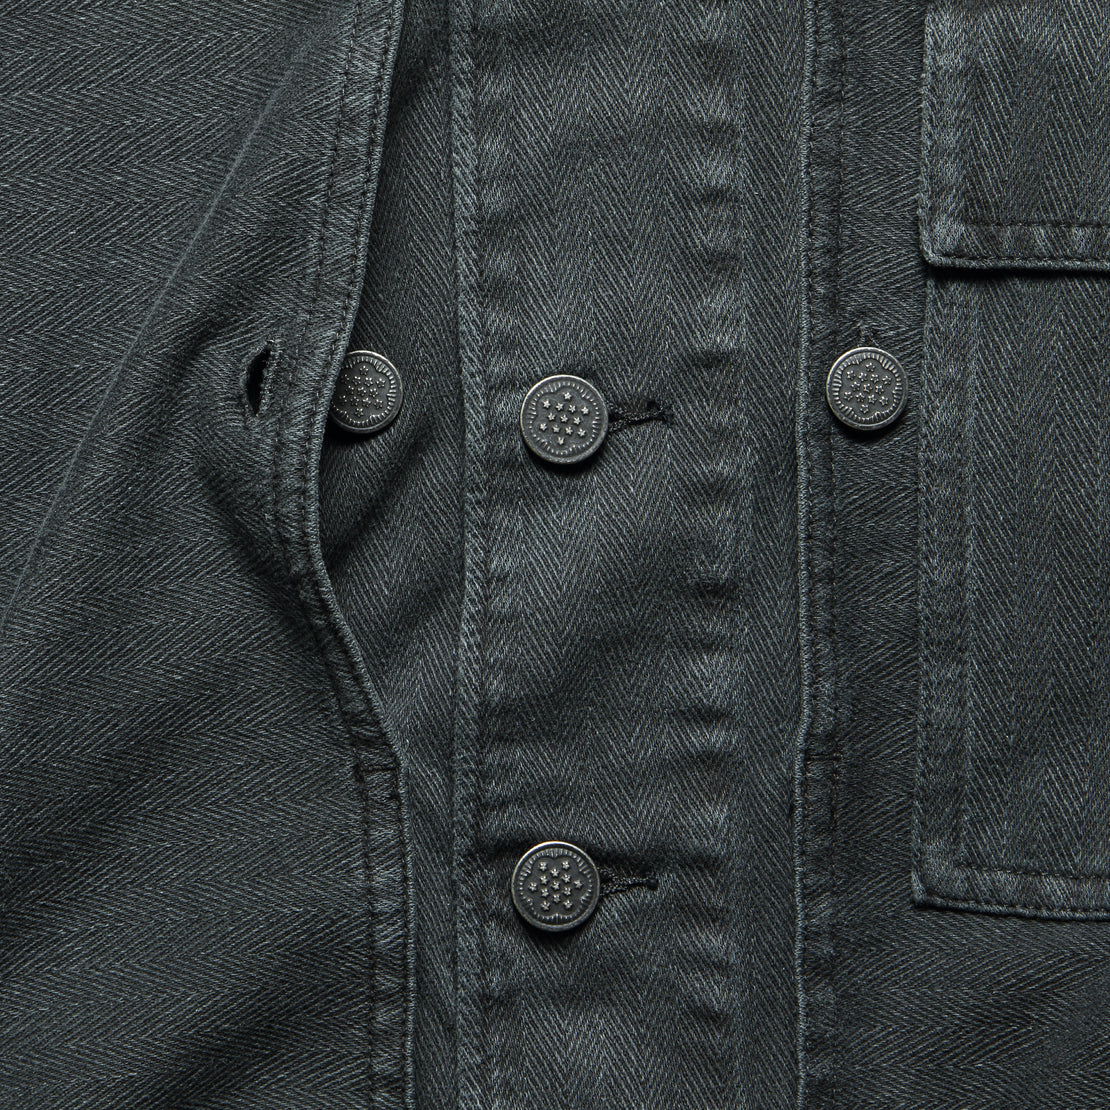 Herringbone Twill Vintage Fit Overshirt - Sulphur Black - RRL - STAG Provisions - Tops - L/S Woven - Overshirt